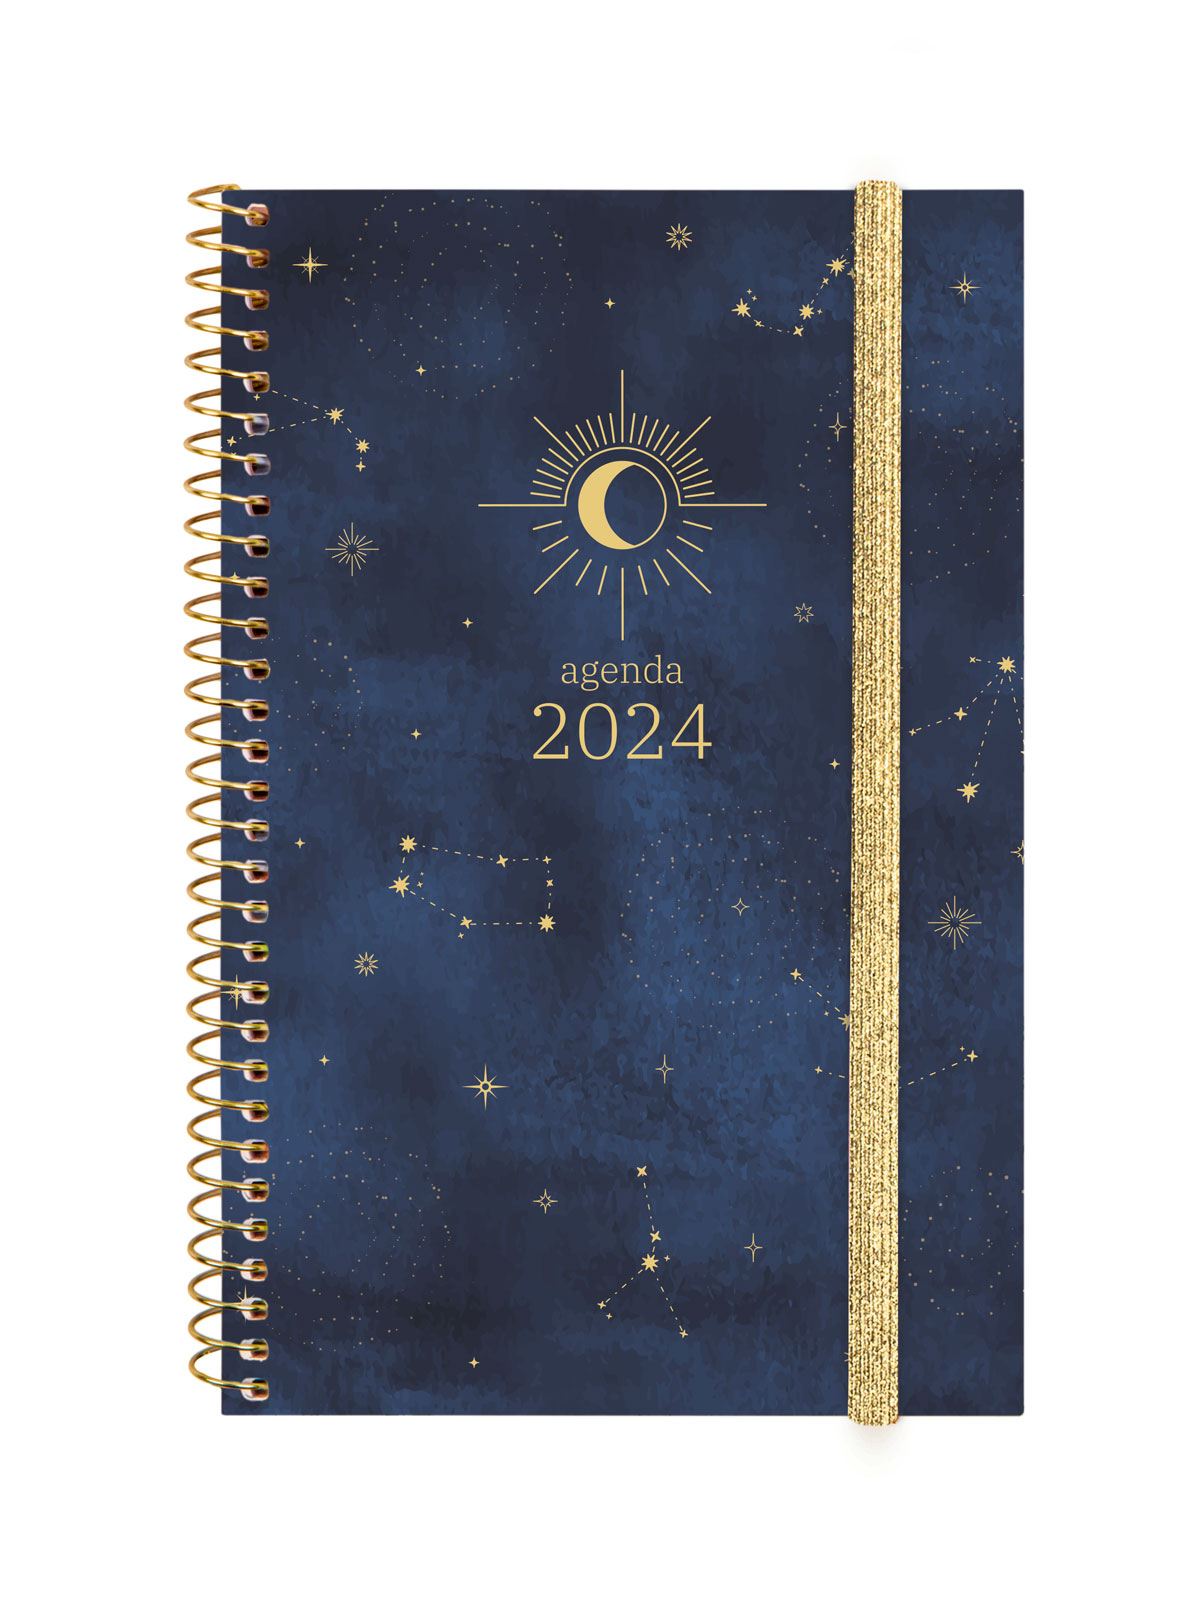 Agenda 2024 Bolso (9x14cm - P07) papel marfim - ORIGINALB